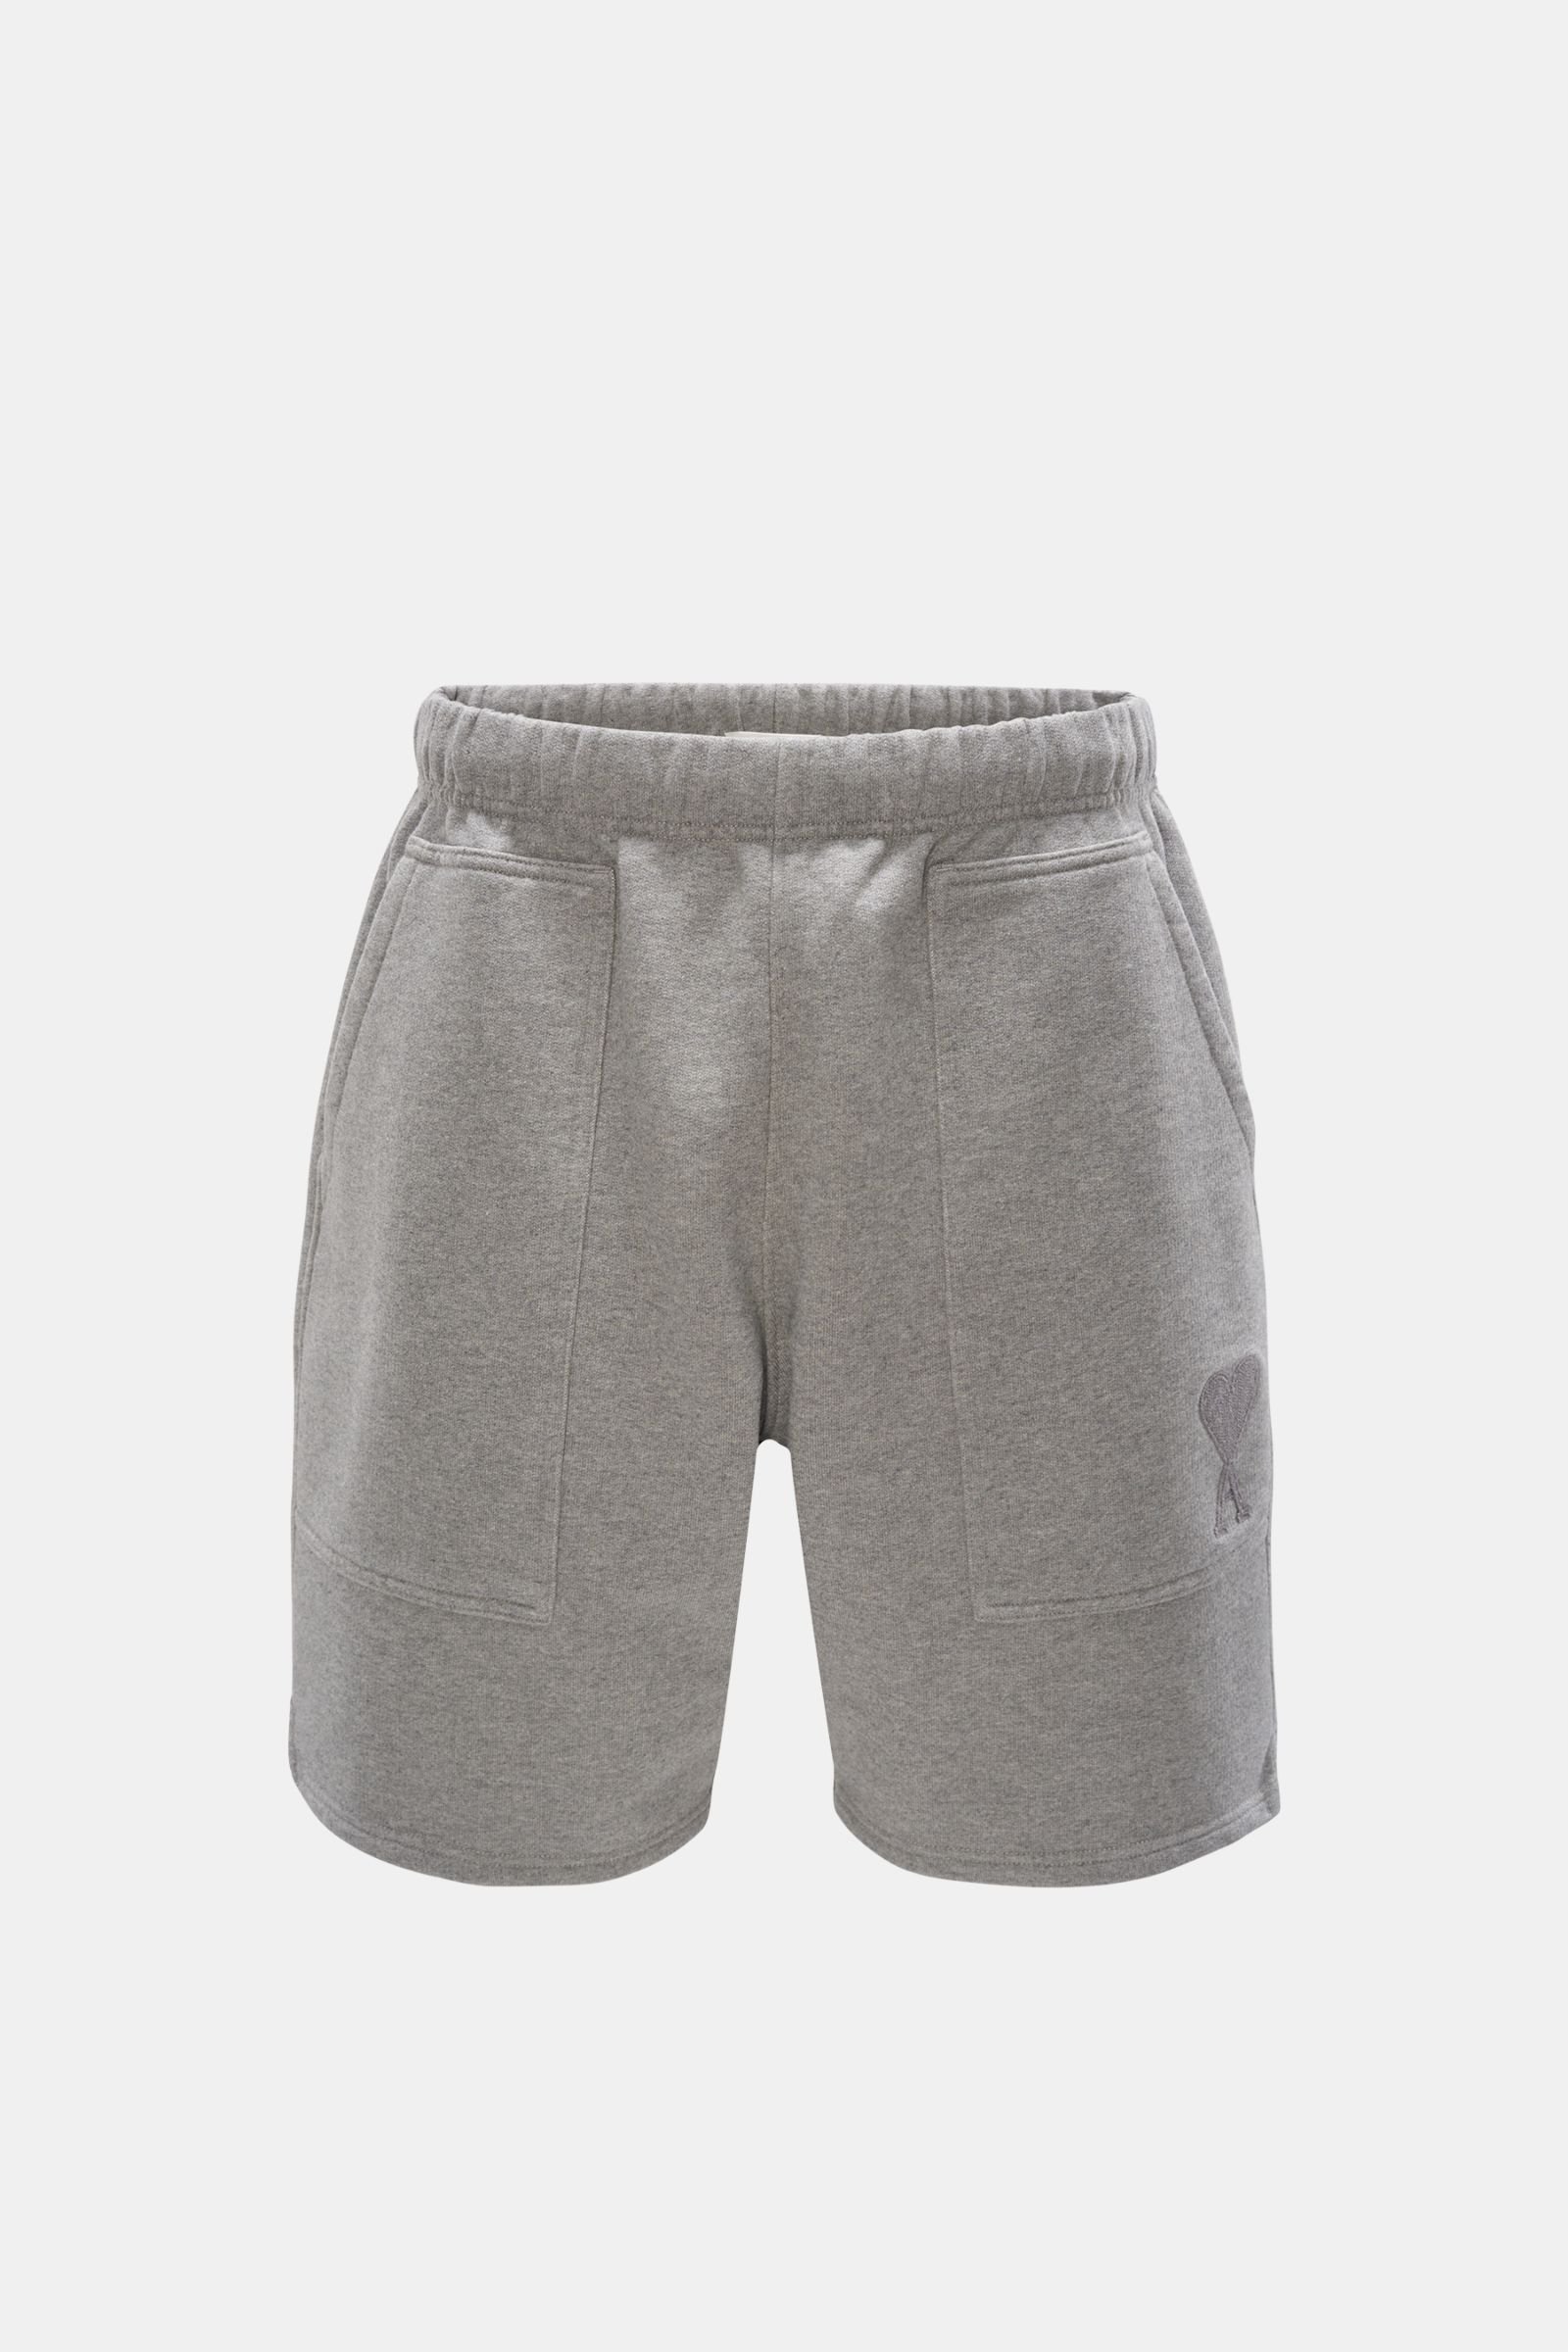 Sweat shorts grey 